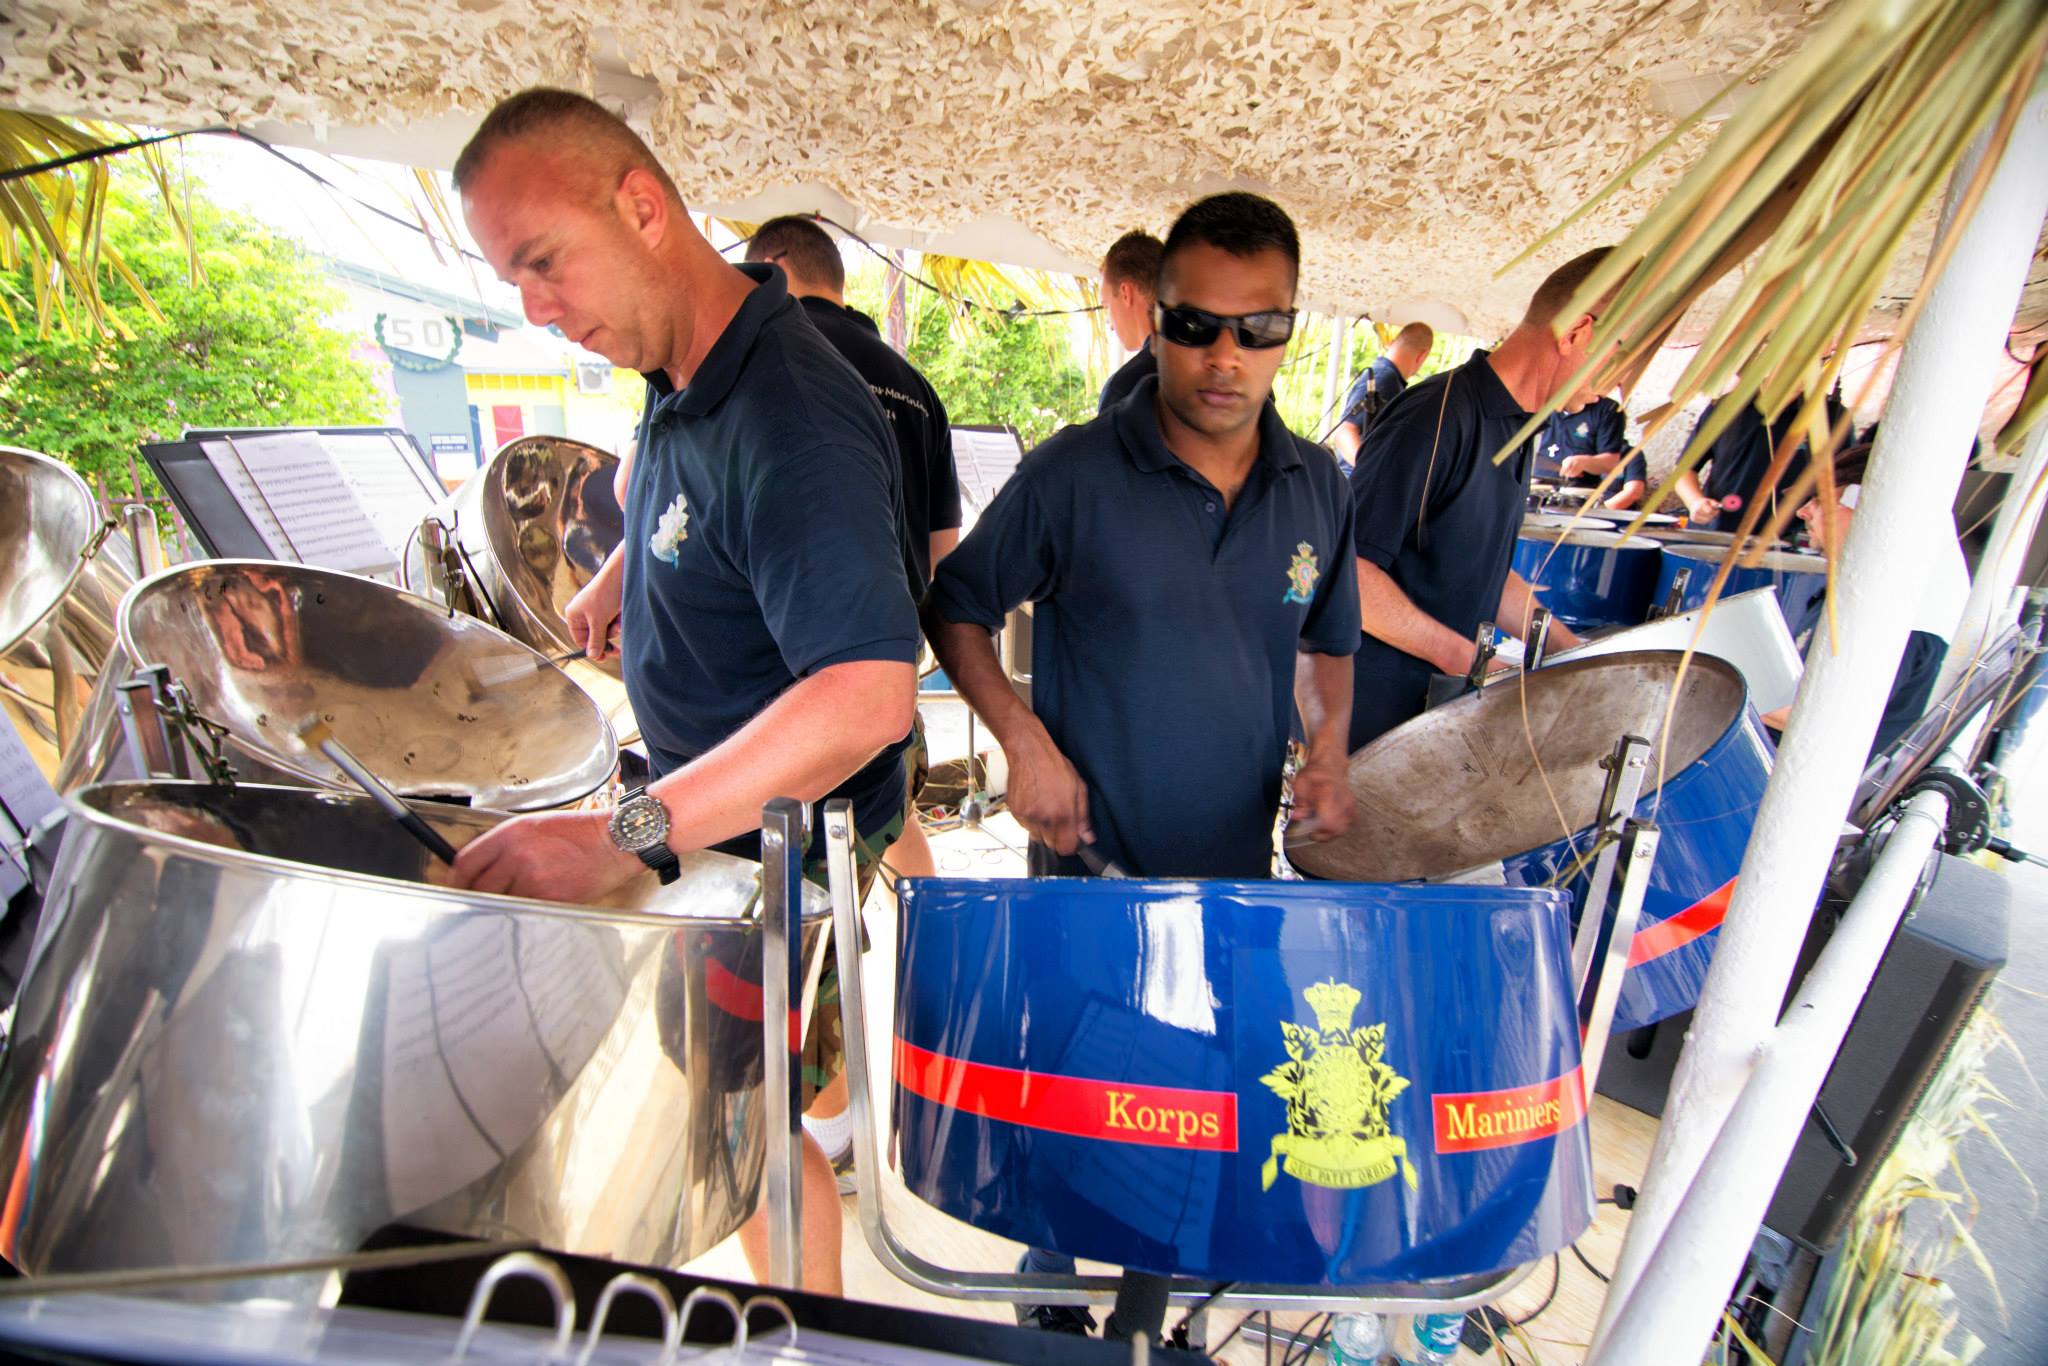 maldense-vierdaagsefeesten-korps-mariniers